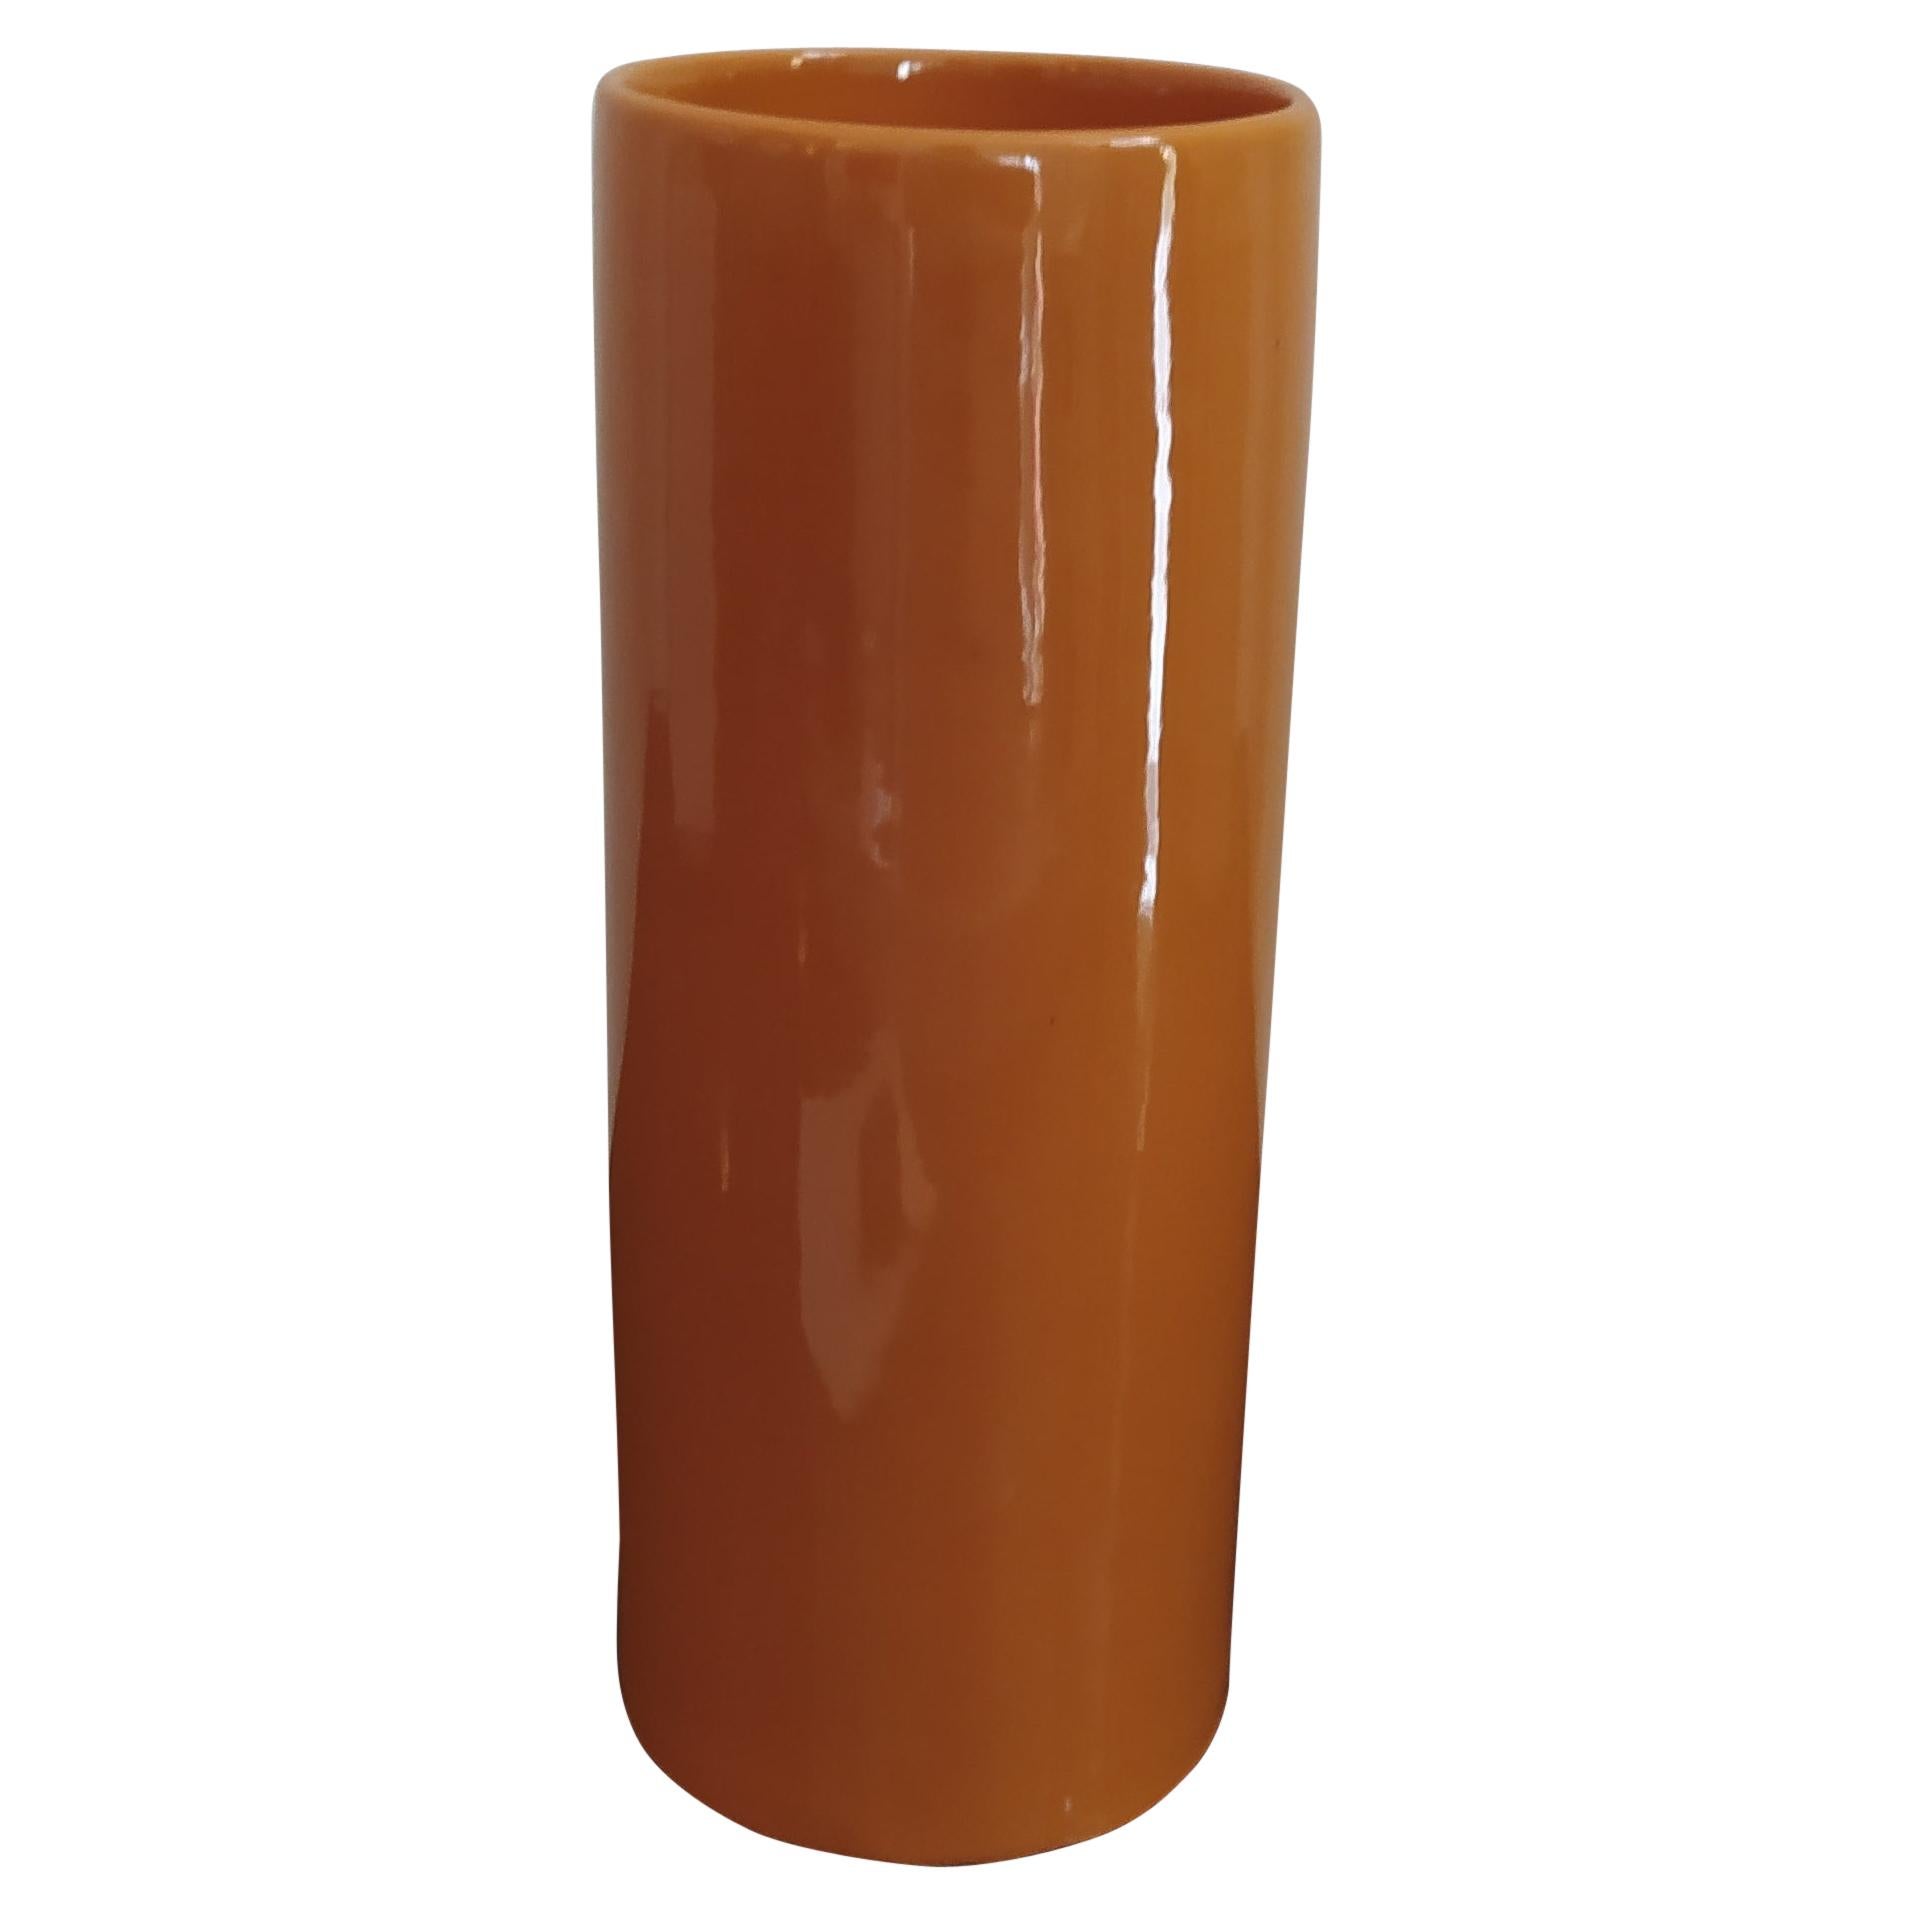 1970s Astonishing Space Age Orange Vase by Gabbianelli. Made in Italy